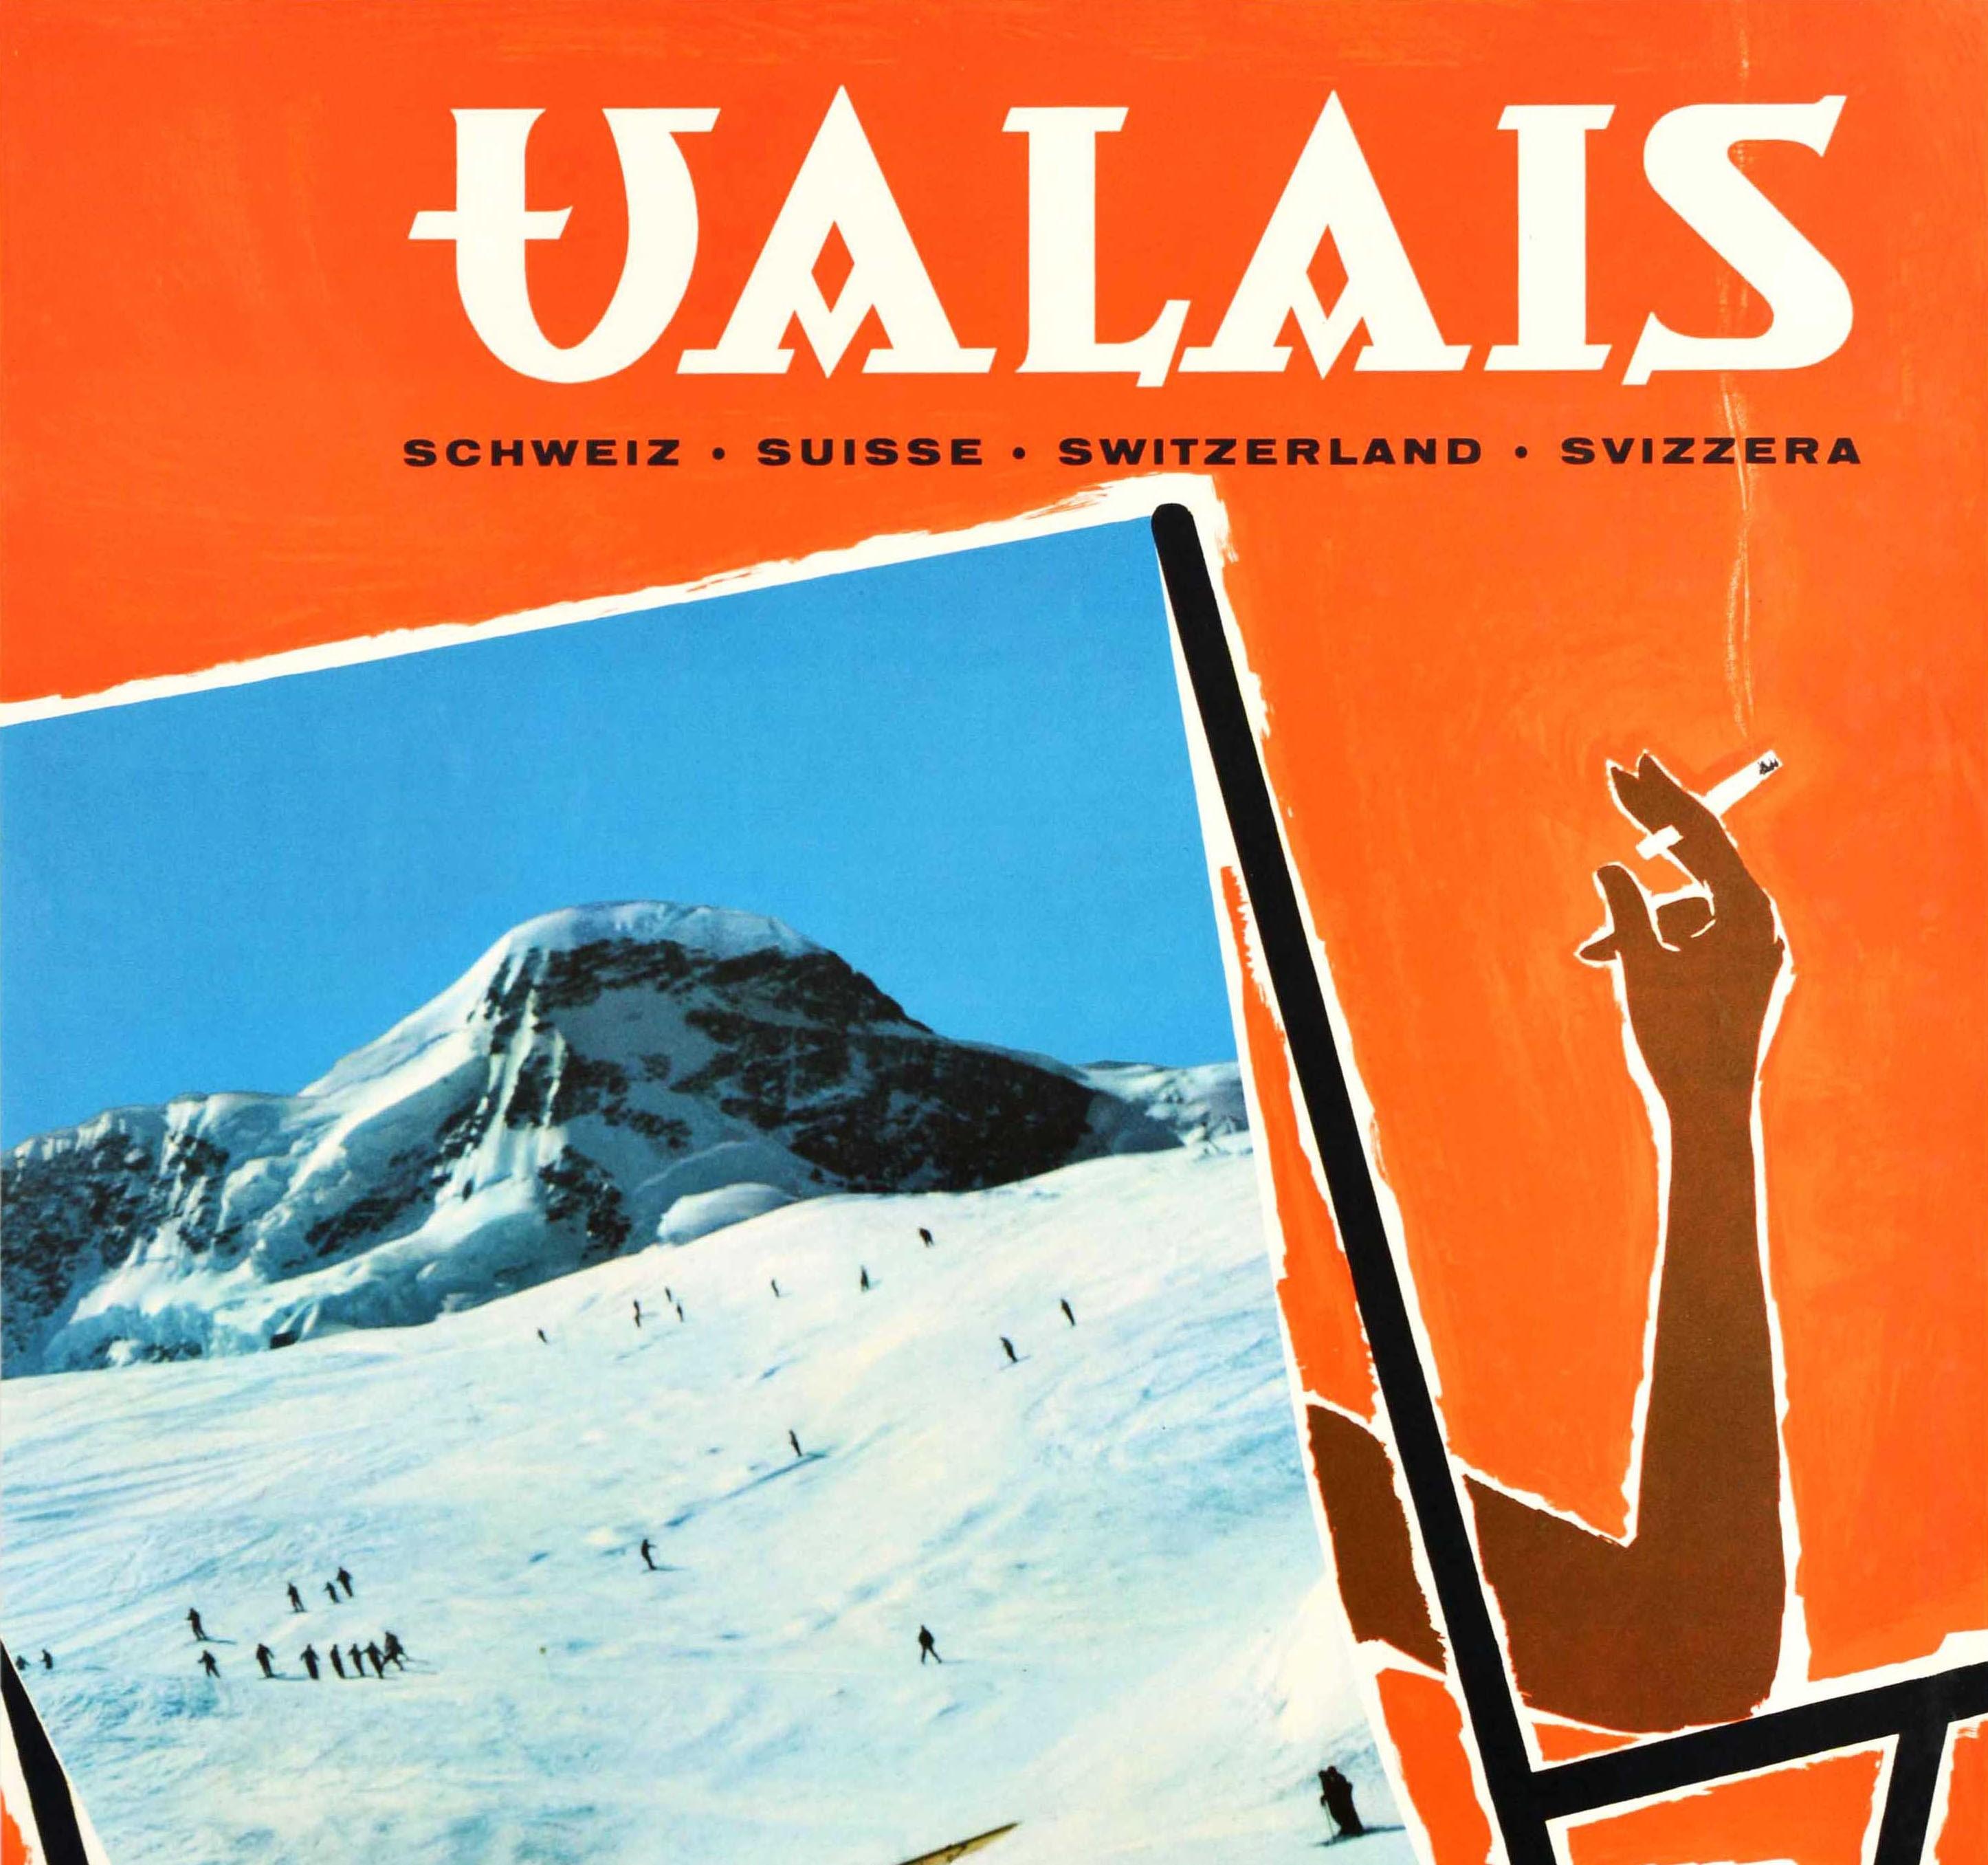 Original Vintage Swiss Poster Valais Switzerland Winter Travel Skiing Sunbathing - Print by Jean Pierre Otth